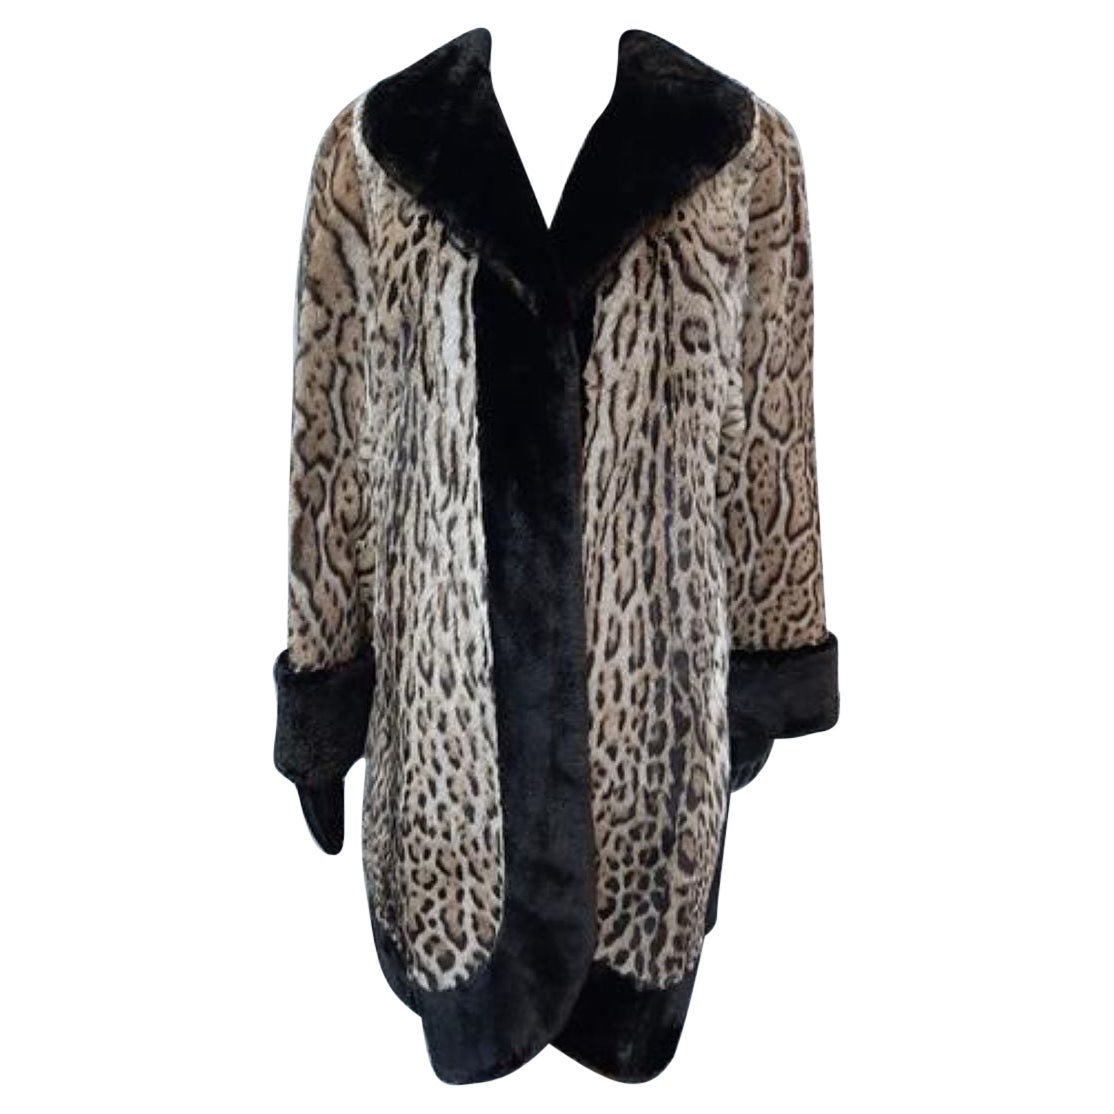 New ocelot fur coat size 14 For Sale